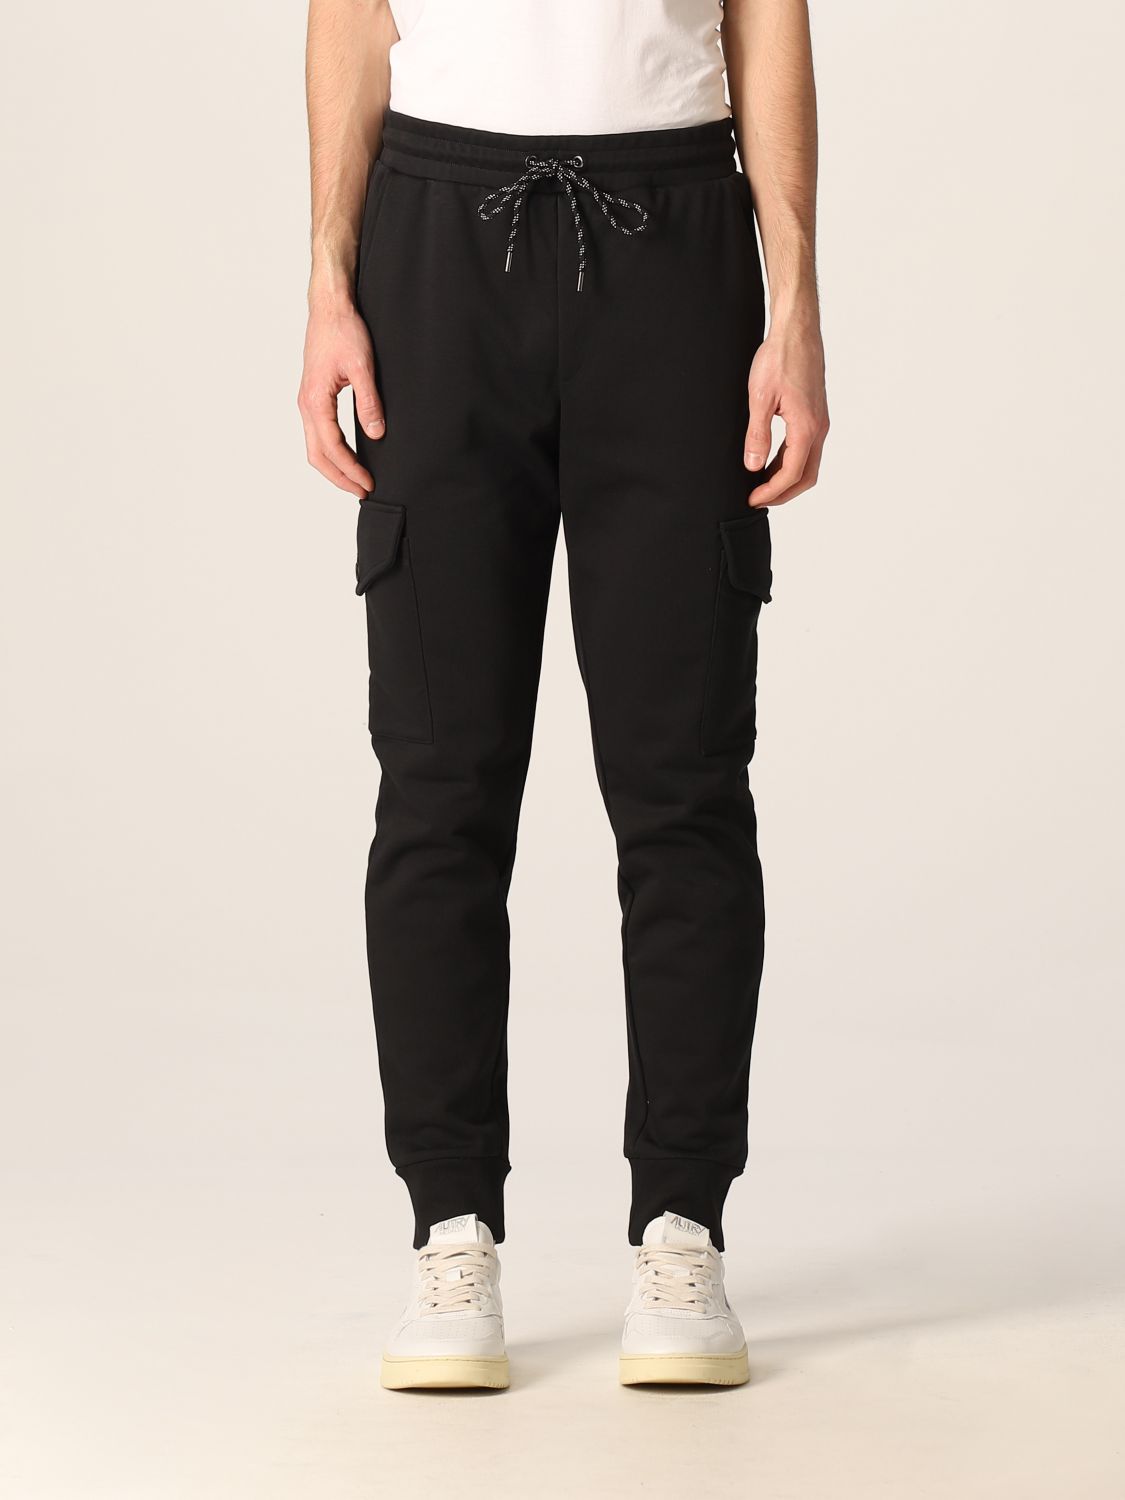 MICHAEL KORS: Michael multi-pocket trousers with logo - Black | Michael ...